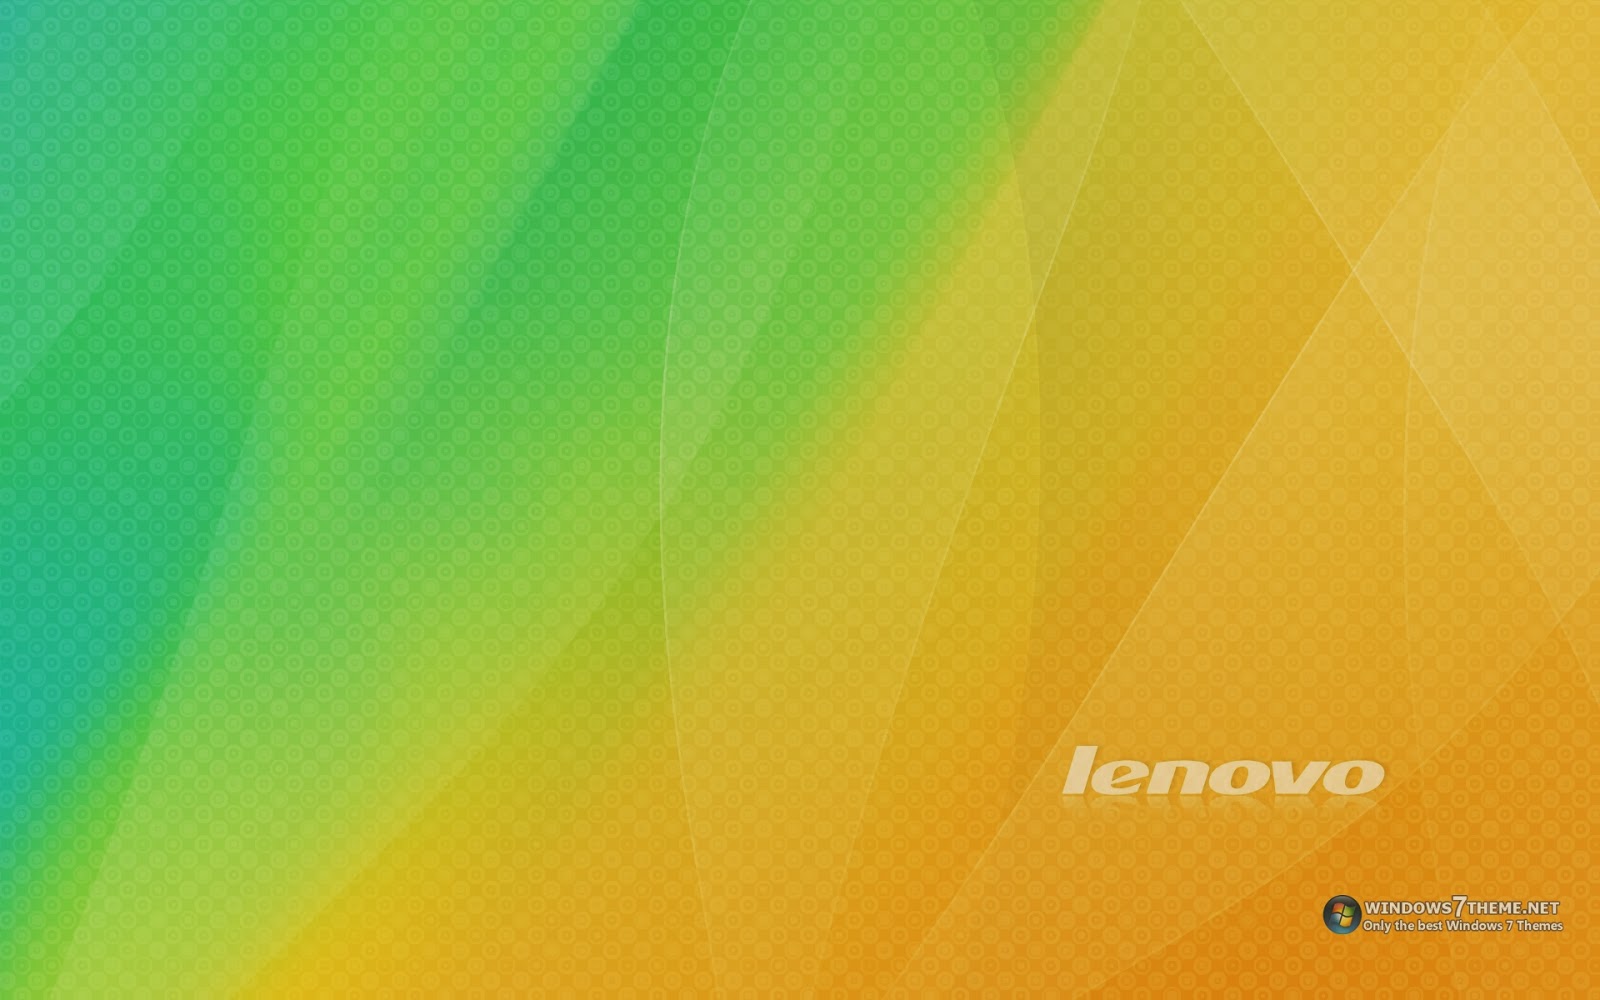 Lenovo Logo Free Download